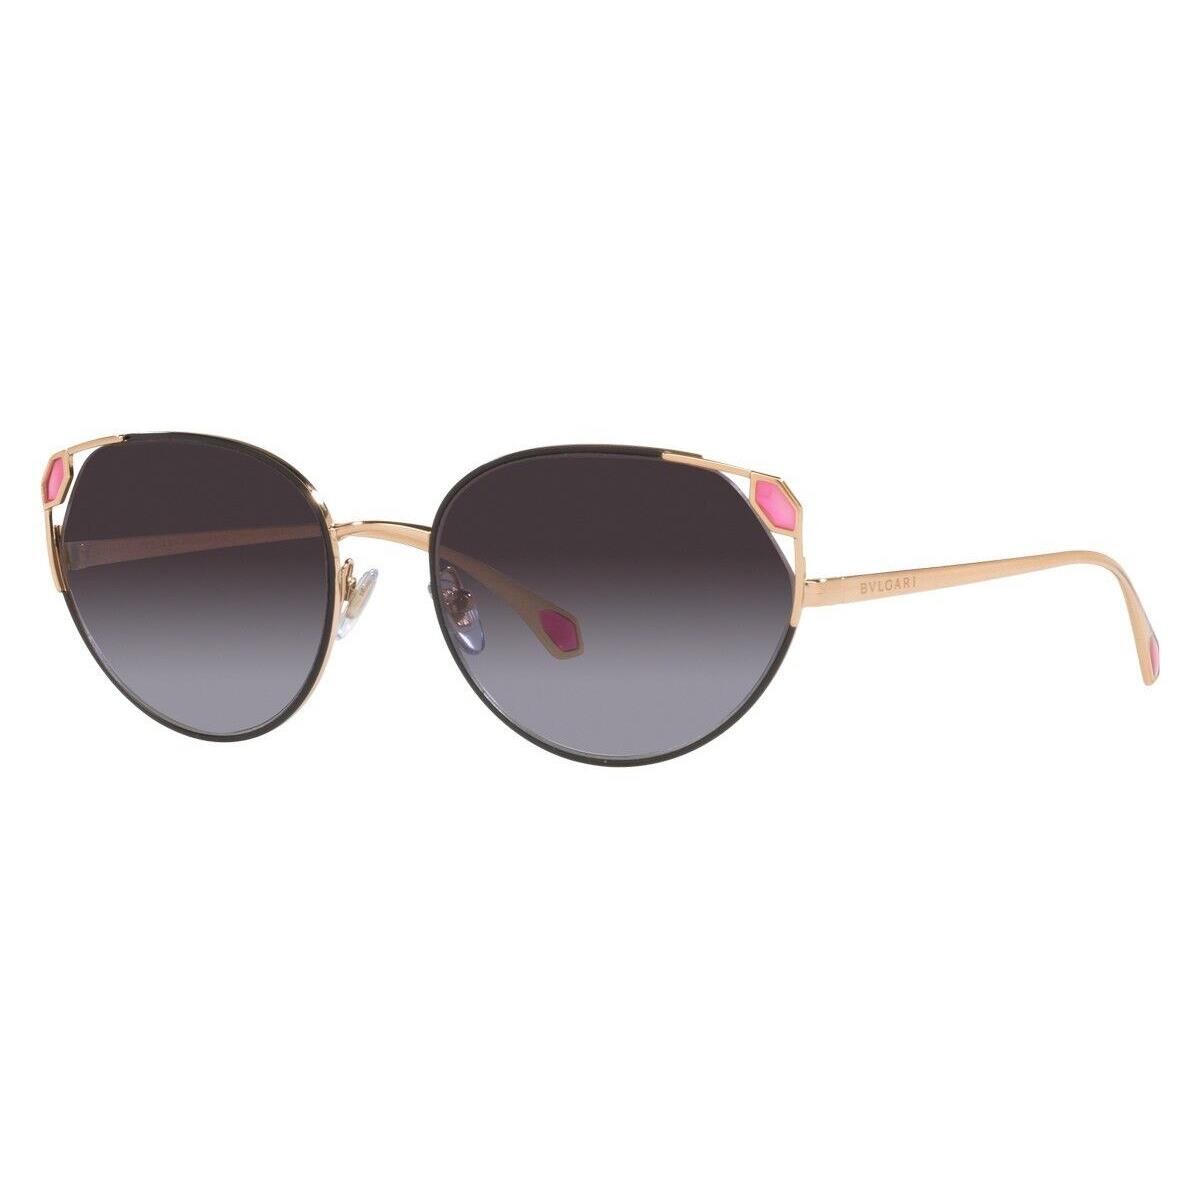 Bvlgari Sunglasses BV6177 20238G Pink Gold Black Frame W/ Grey Gradient Lens